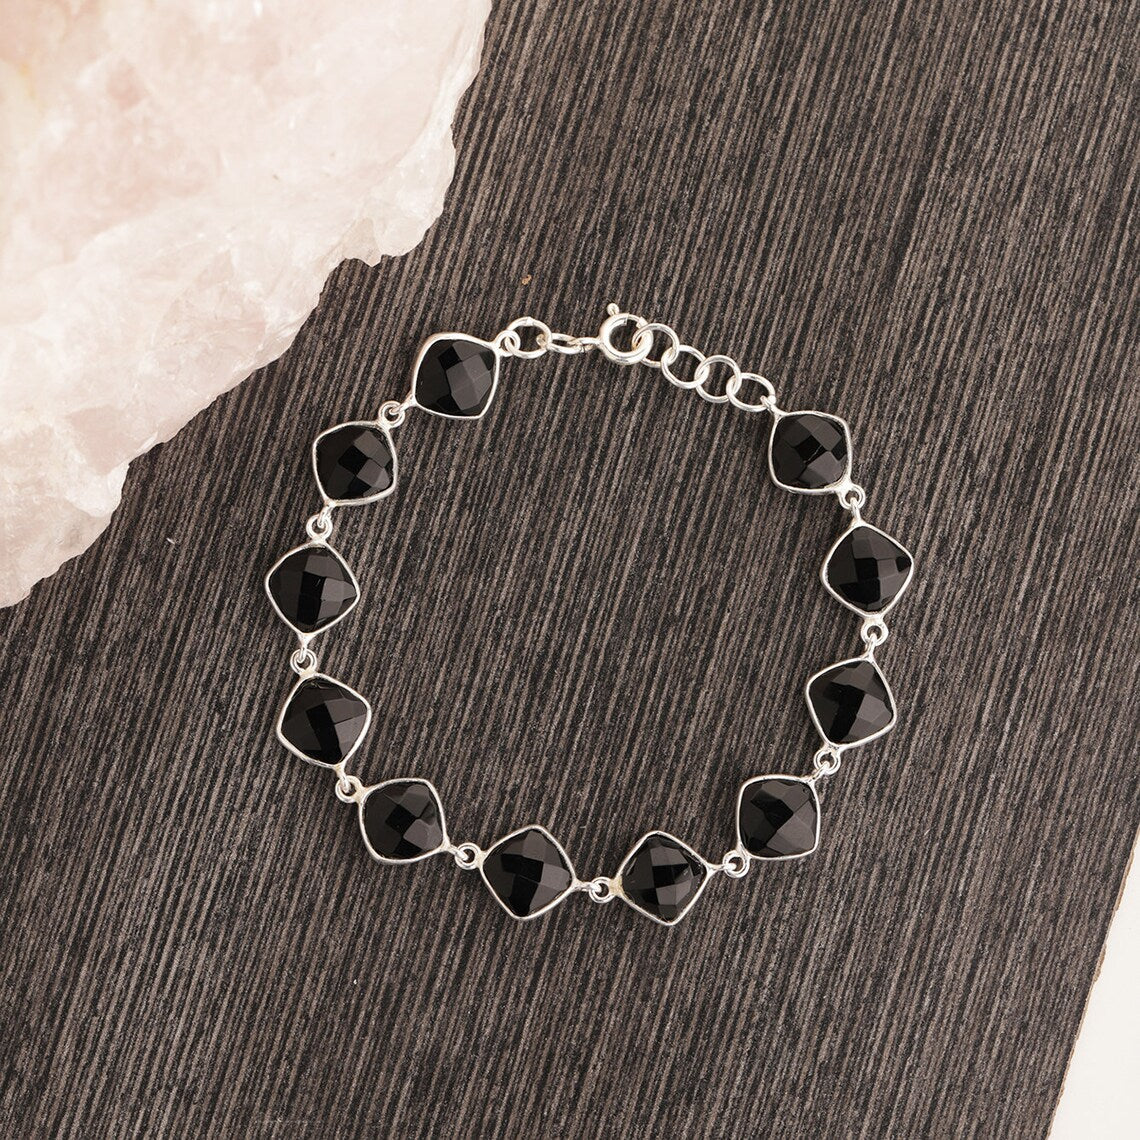 Black Onyx - Sterling Silver - Wrap Bracelet, Black Onyx, Natural Crystal Bracelet